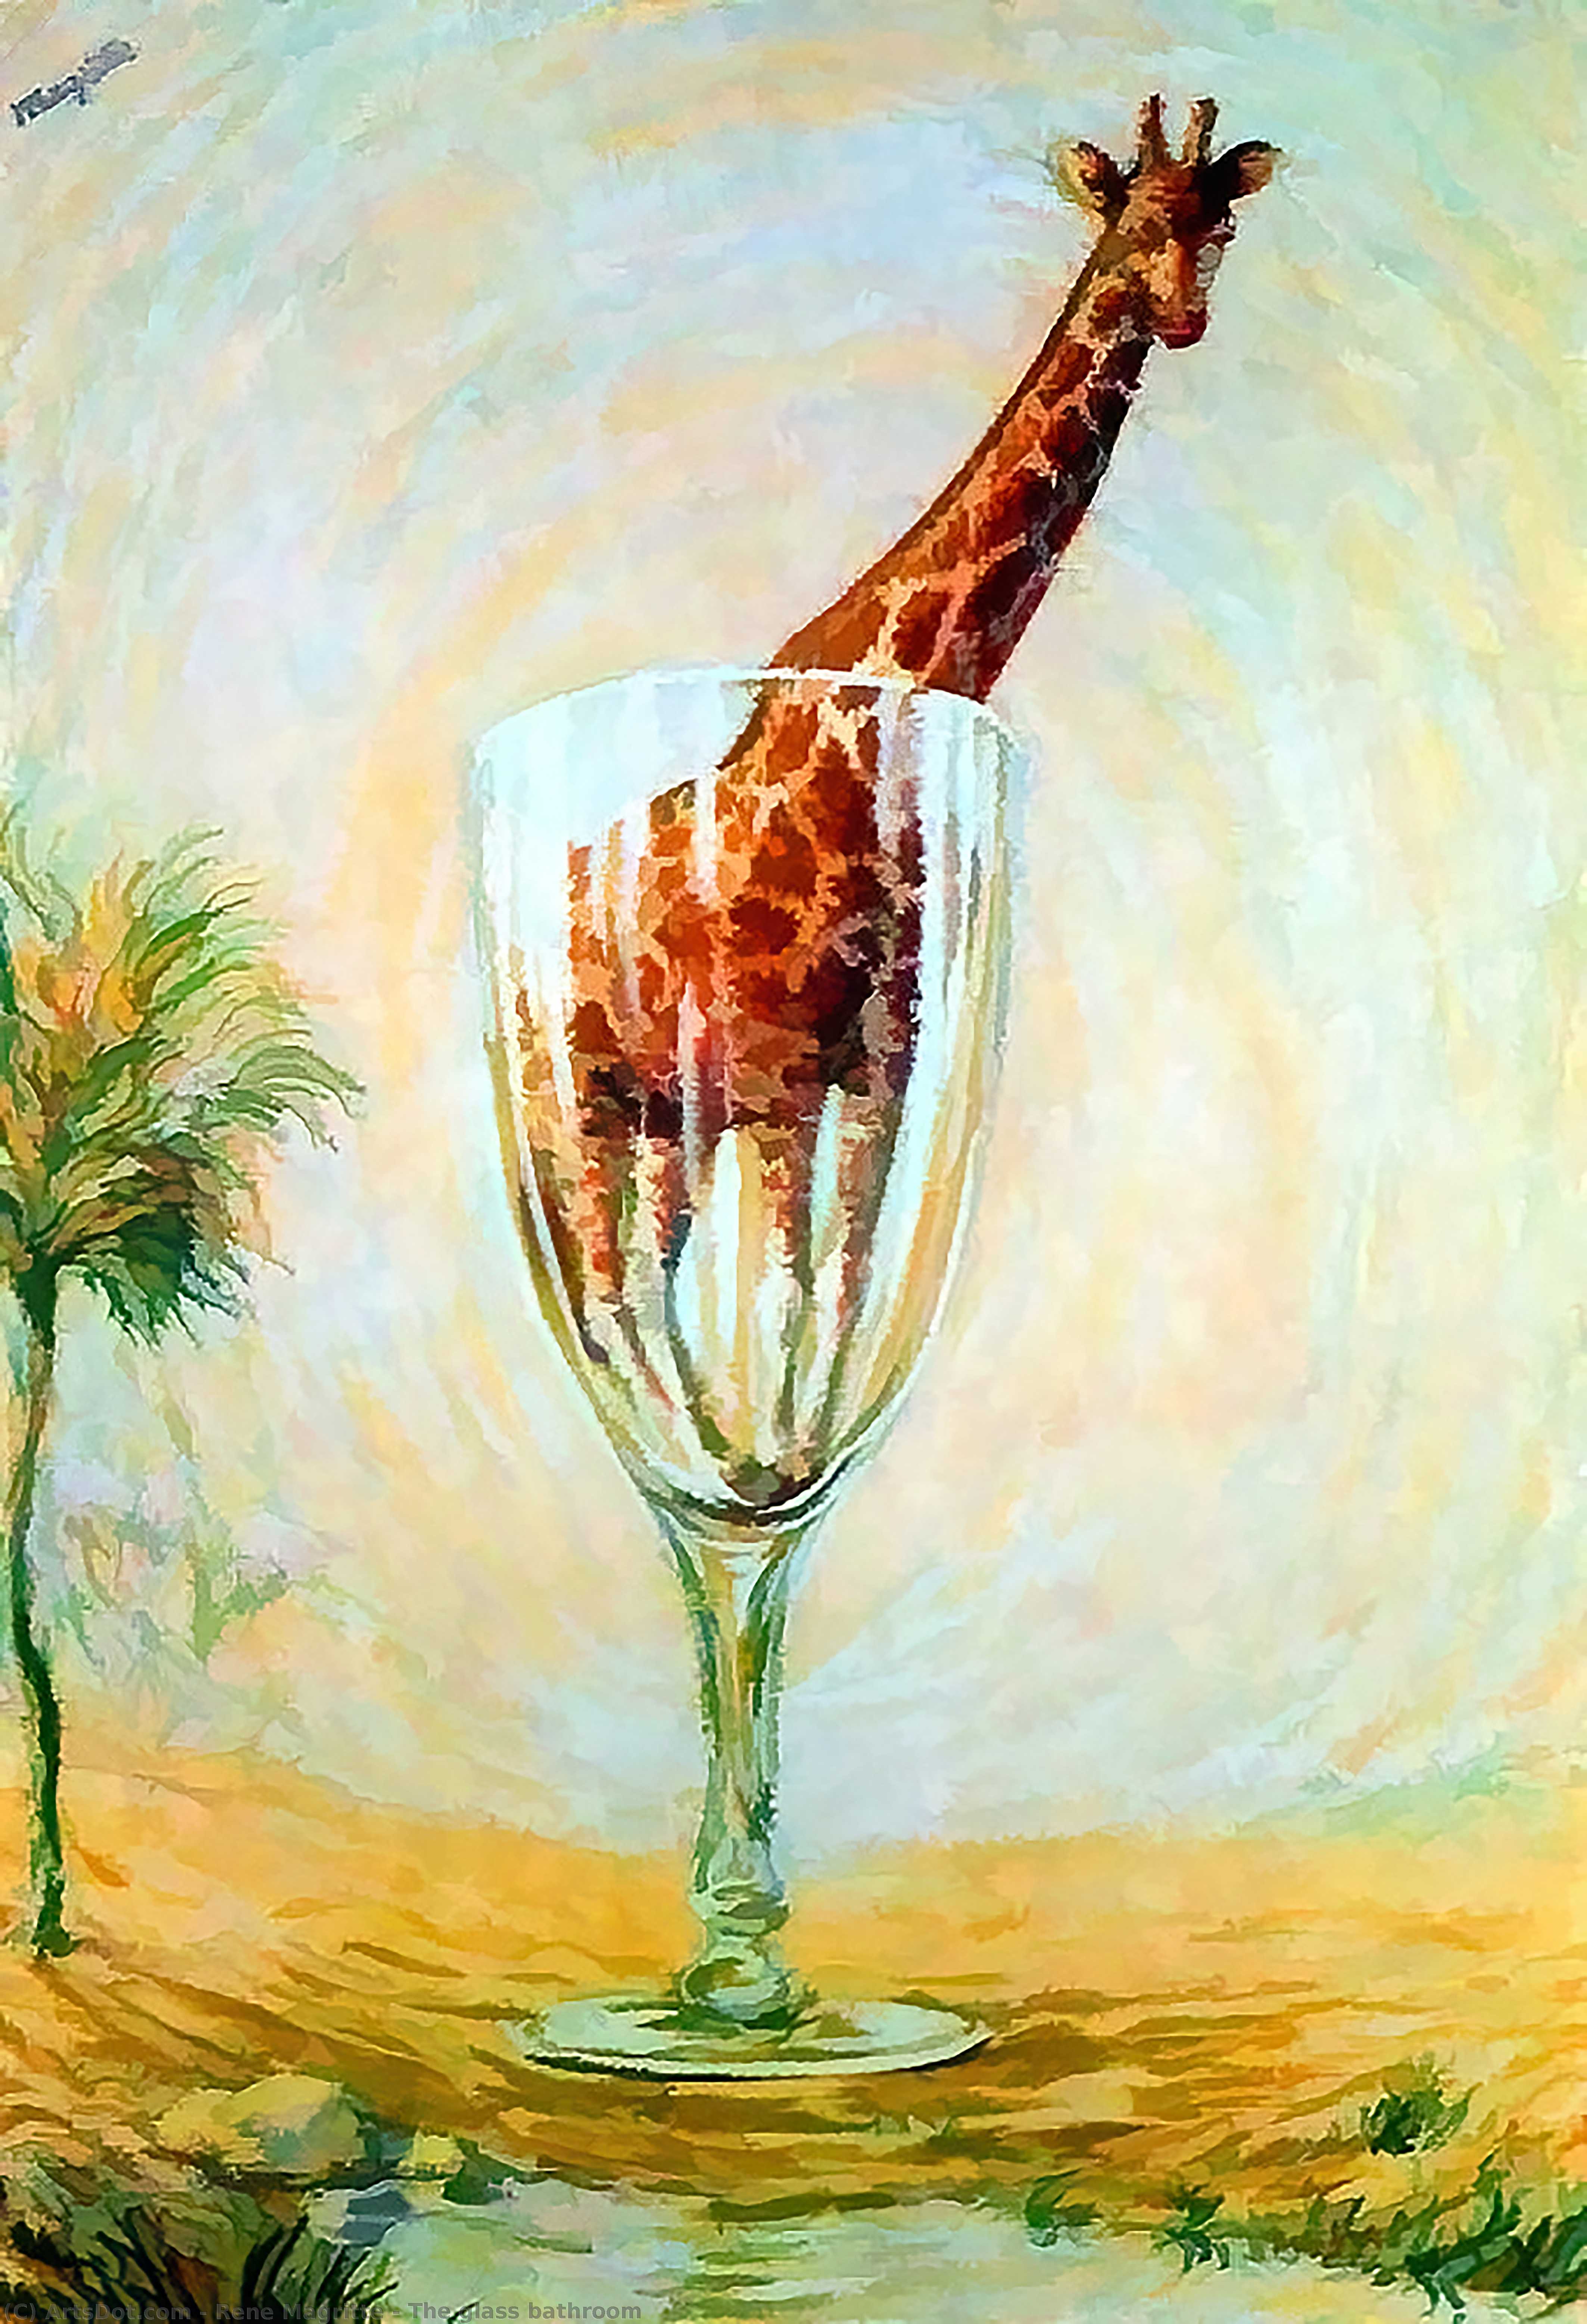 Wikoo.org - موسوعة الفنون الجميلة - اللوحة، العمل الفني Rene Magritte - The glass bathroom